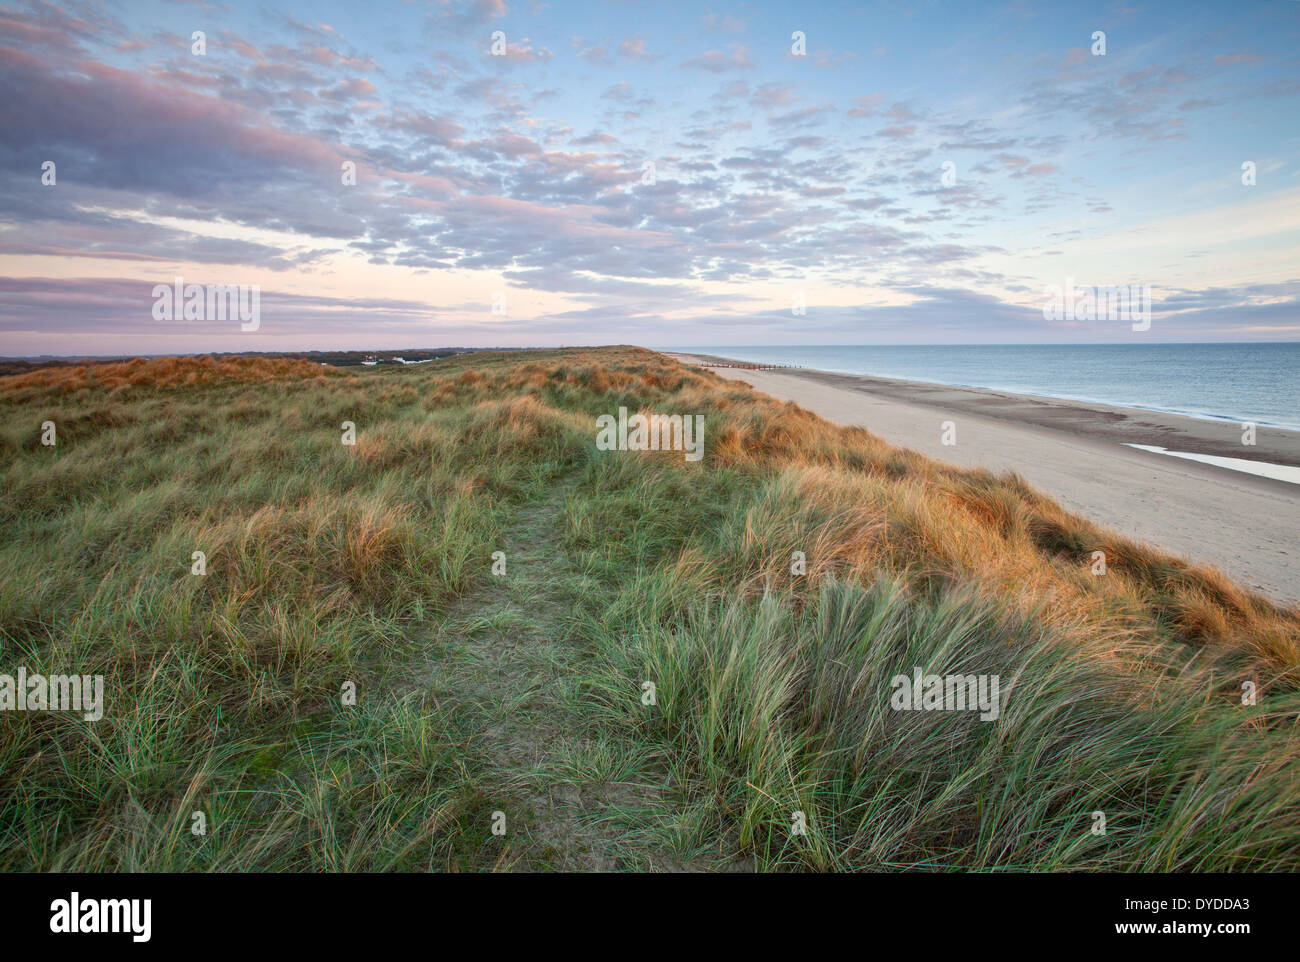 The Norfolk coastline at Horsey. Stock Photo